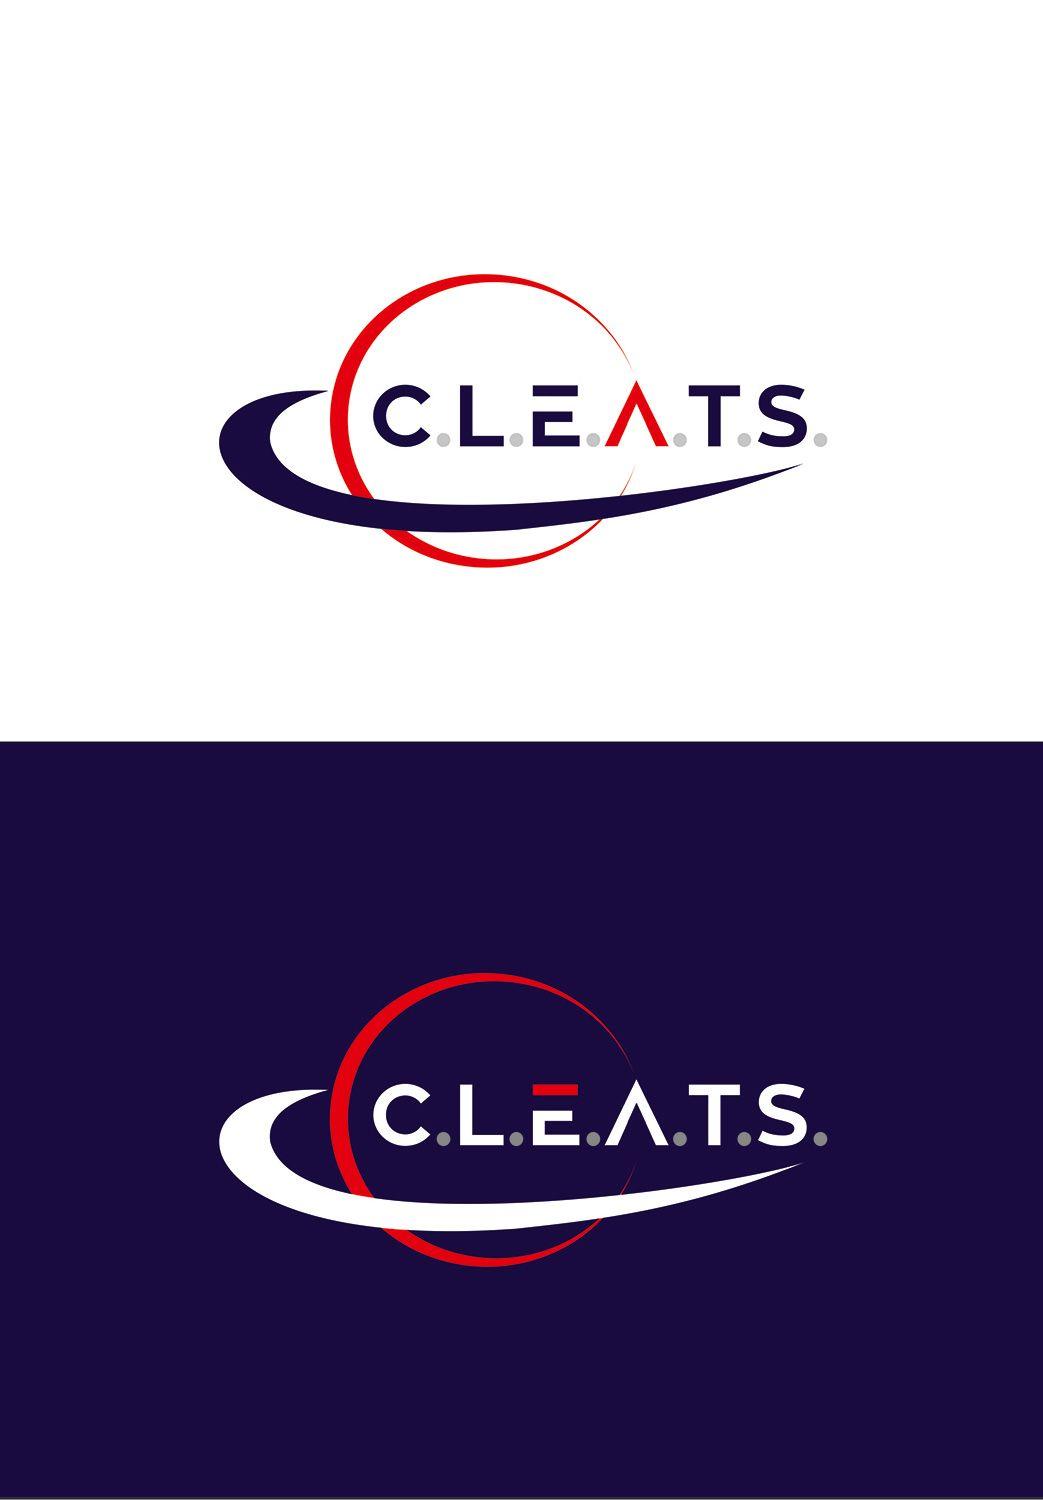 Cleats Logo - Elegant, Playful Logo Design for C.L.E.A.T.S. by Abaan | Design ...